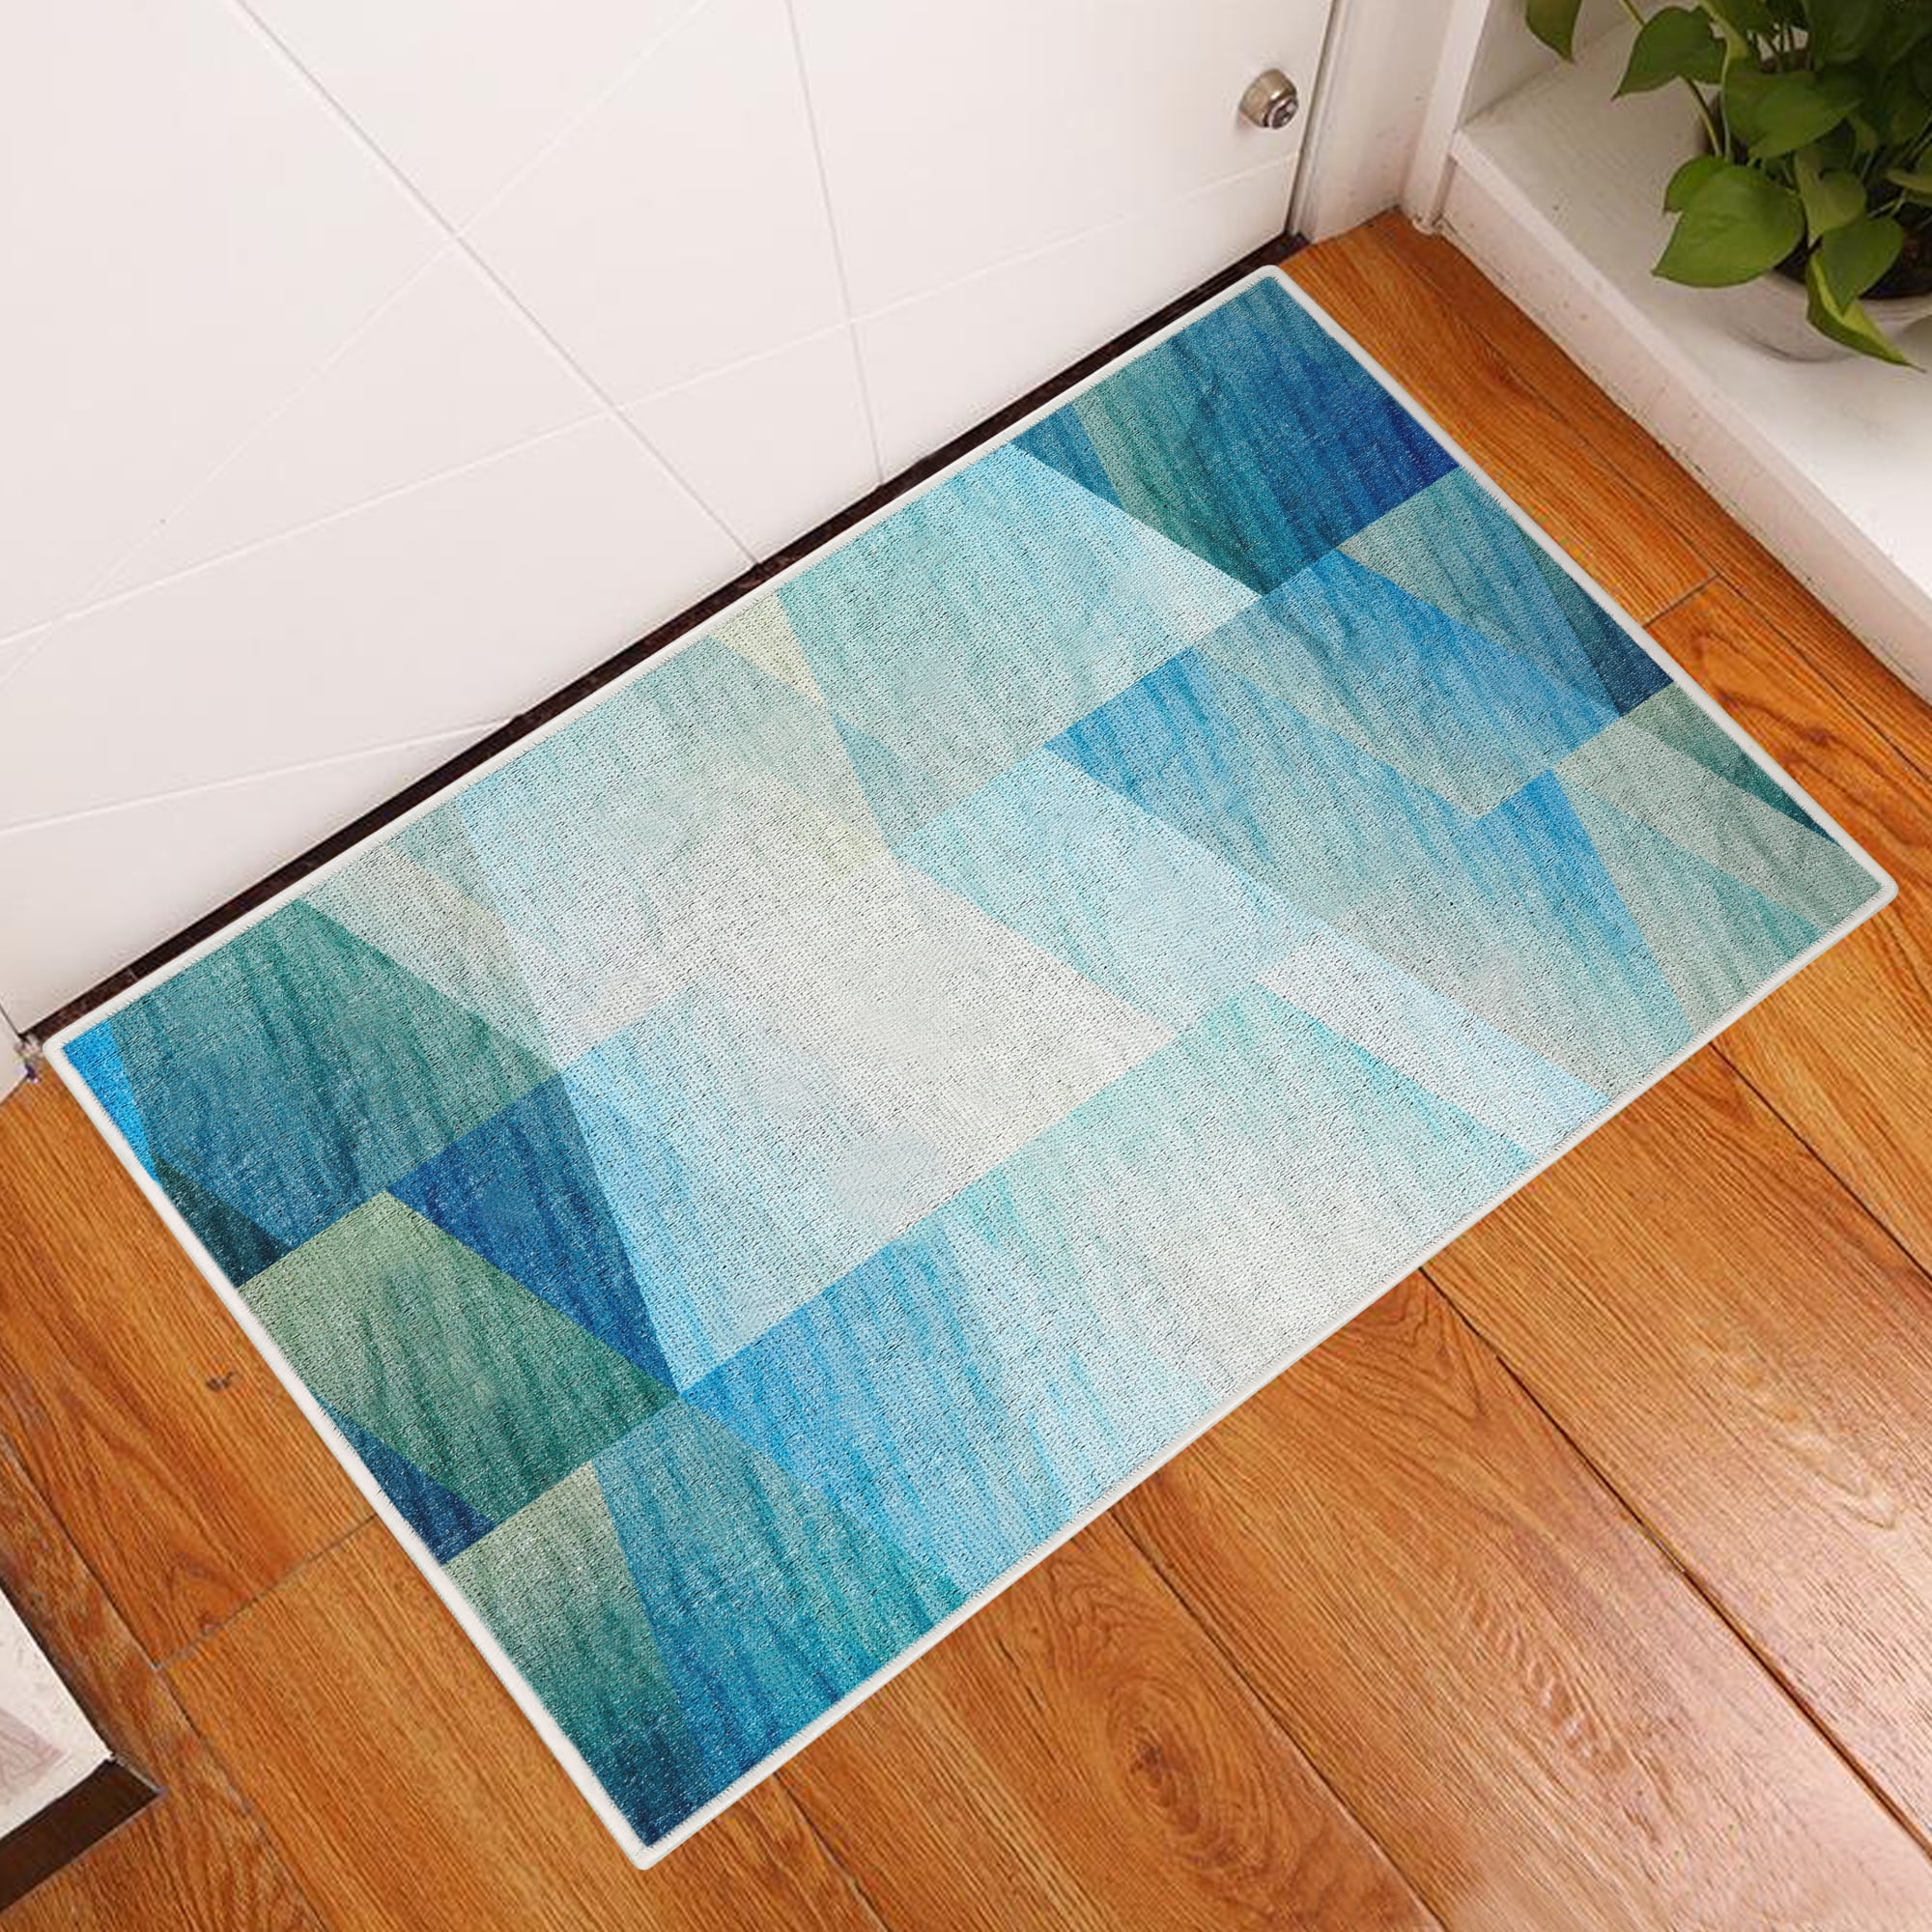 3D Blue Green Leaves Non-Slip Rug Door Shower Play Mat Hearth Floor Carpet 214 